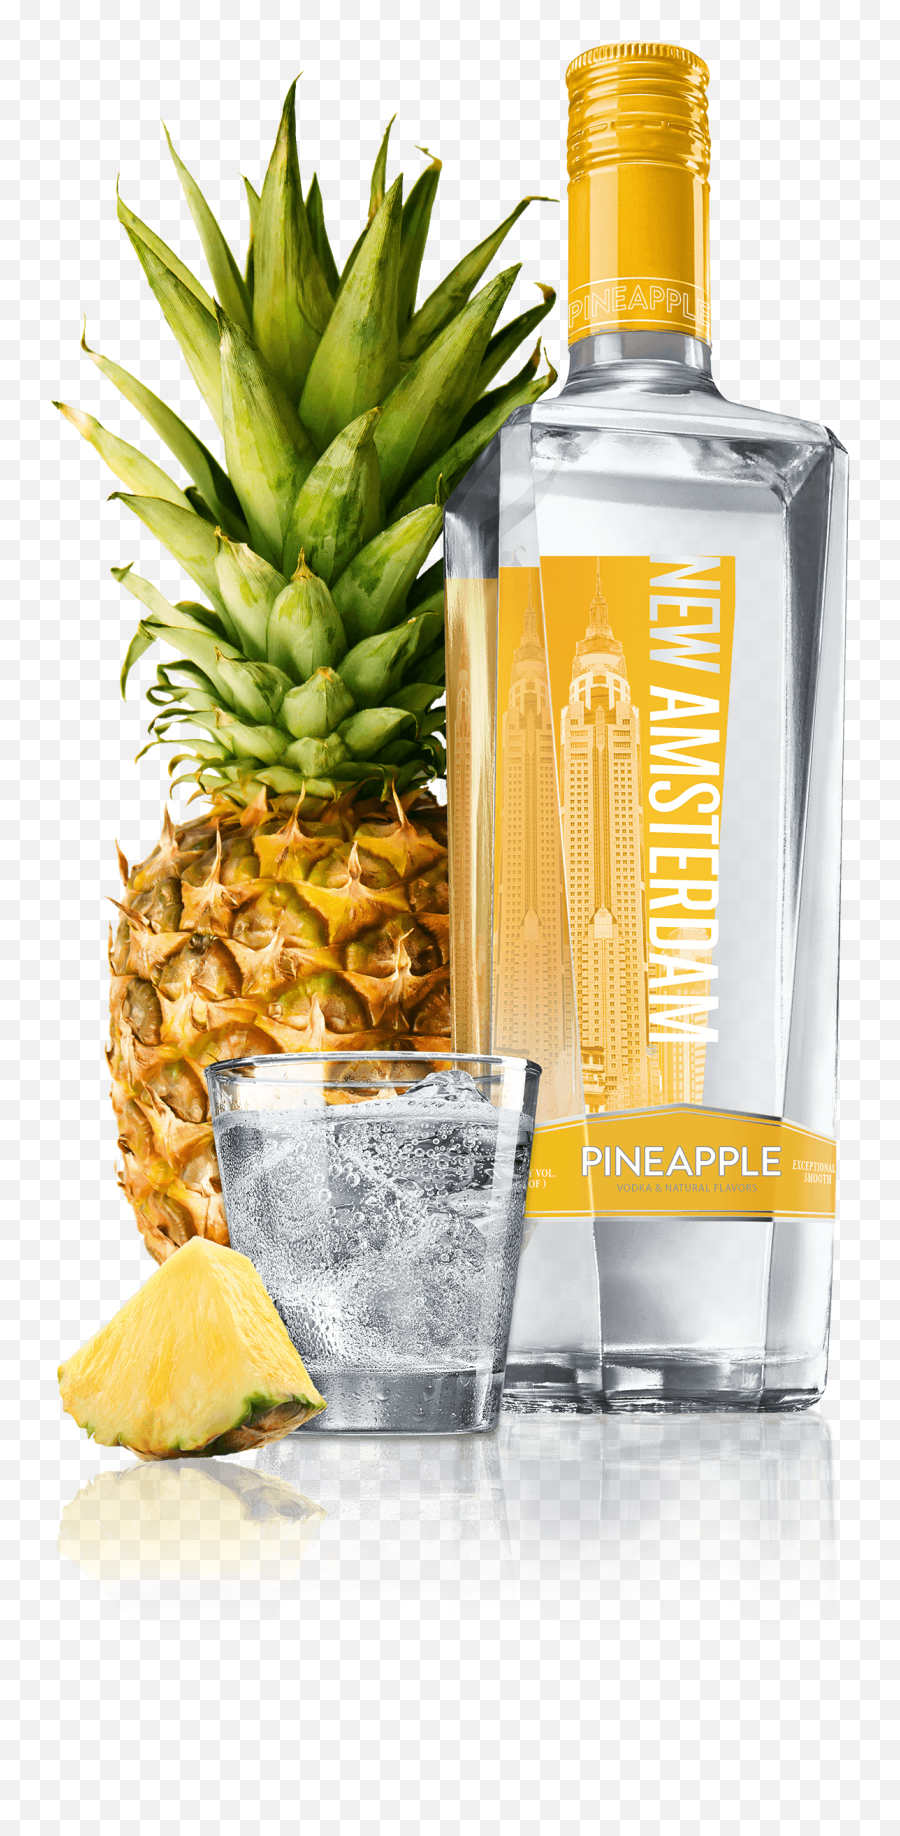 Pineapple Vodka New Amsterdam - Pineapple Amsterdam Vodka Png,Pineapples Png